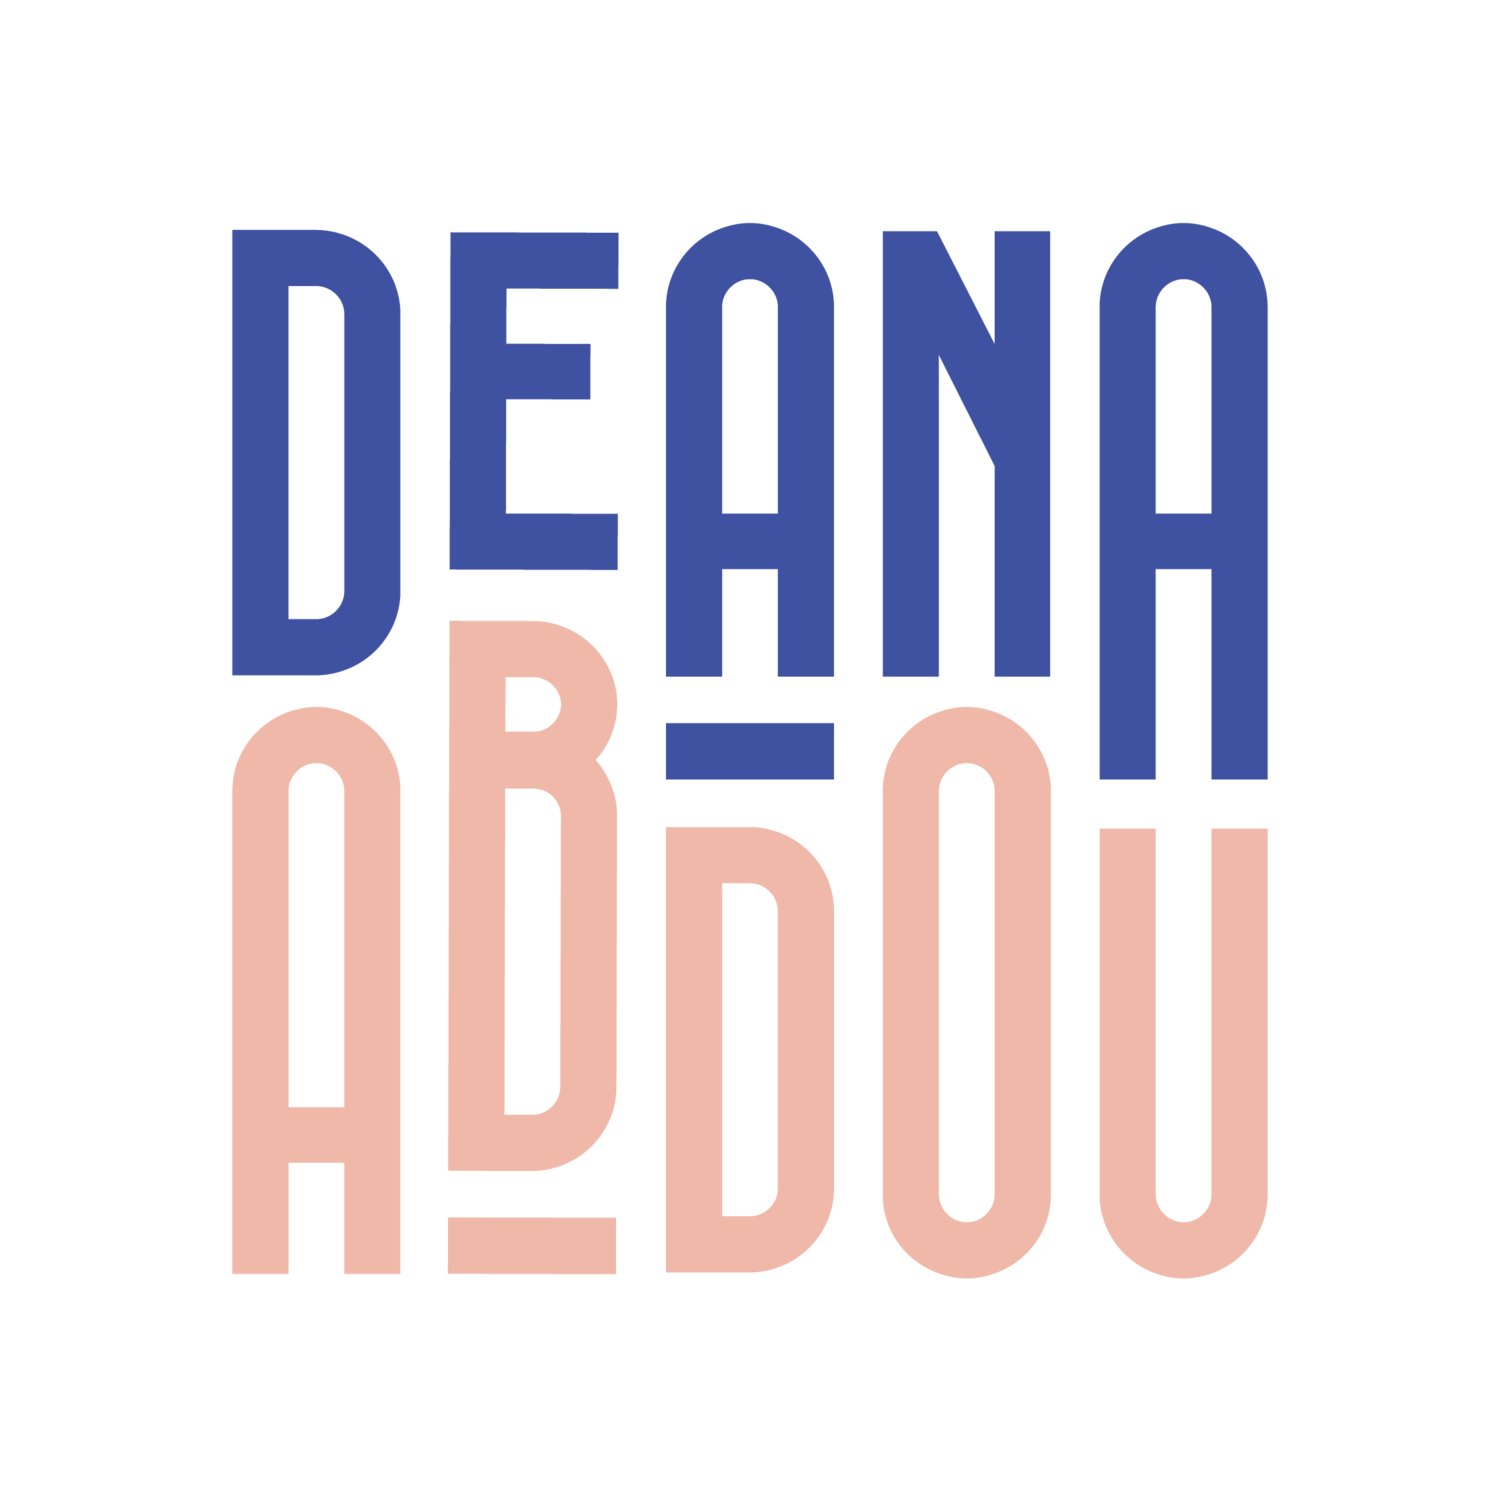 Deana Abdou